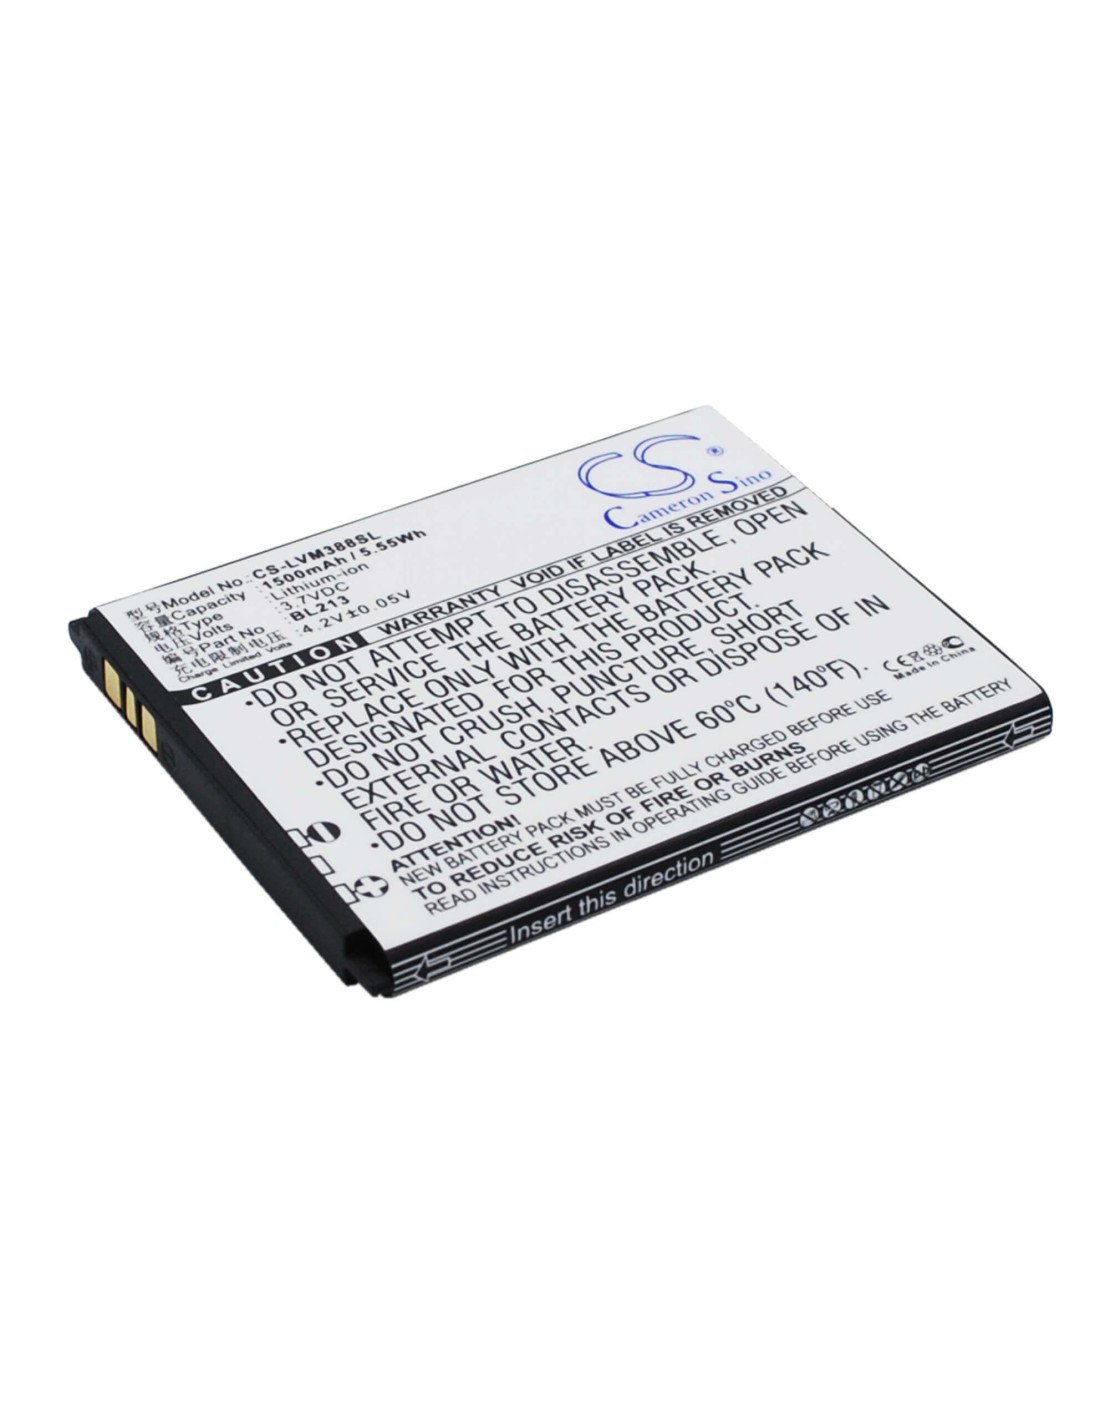 Battery for Lenovo MA388A, MA388 3.7V, 1500mAh - 5.55Wh